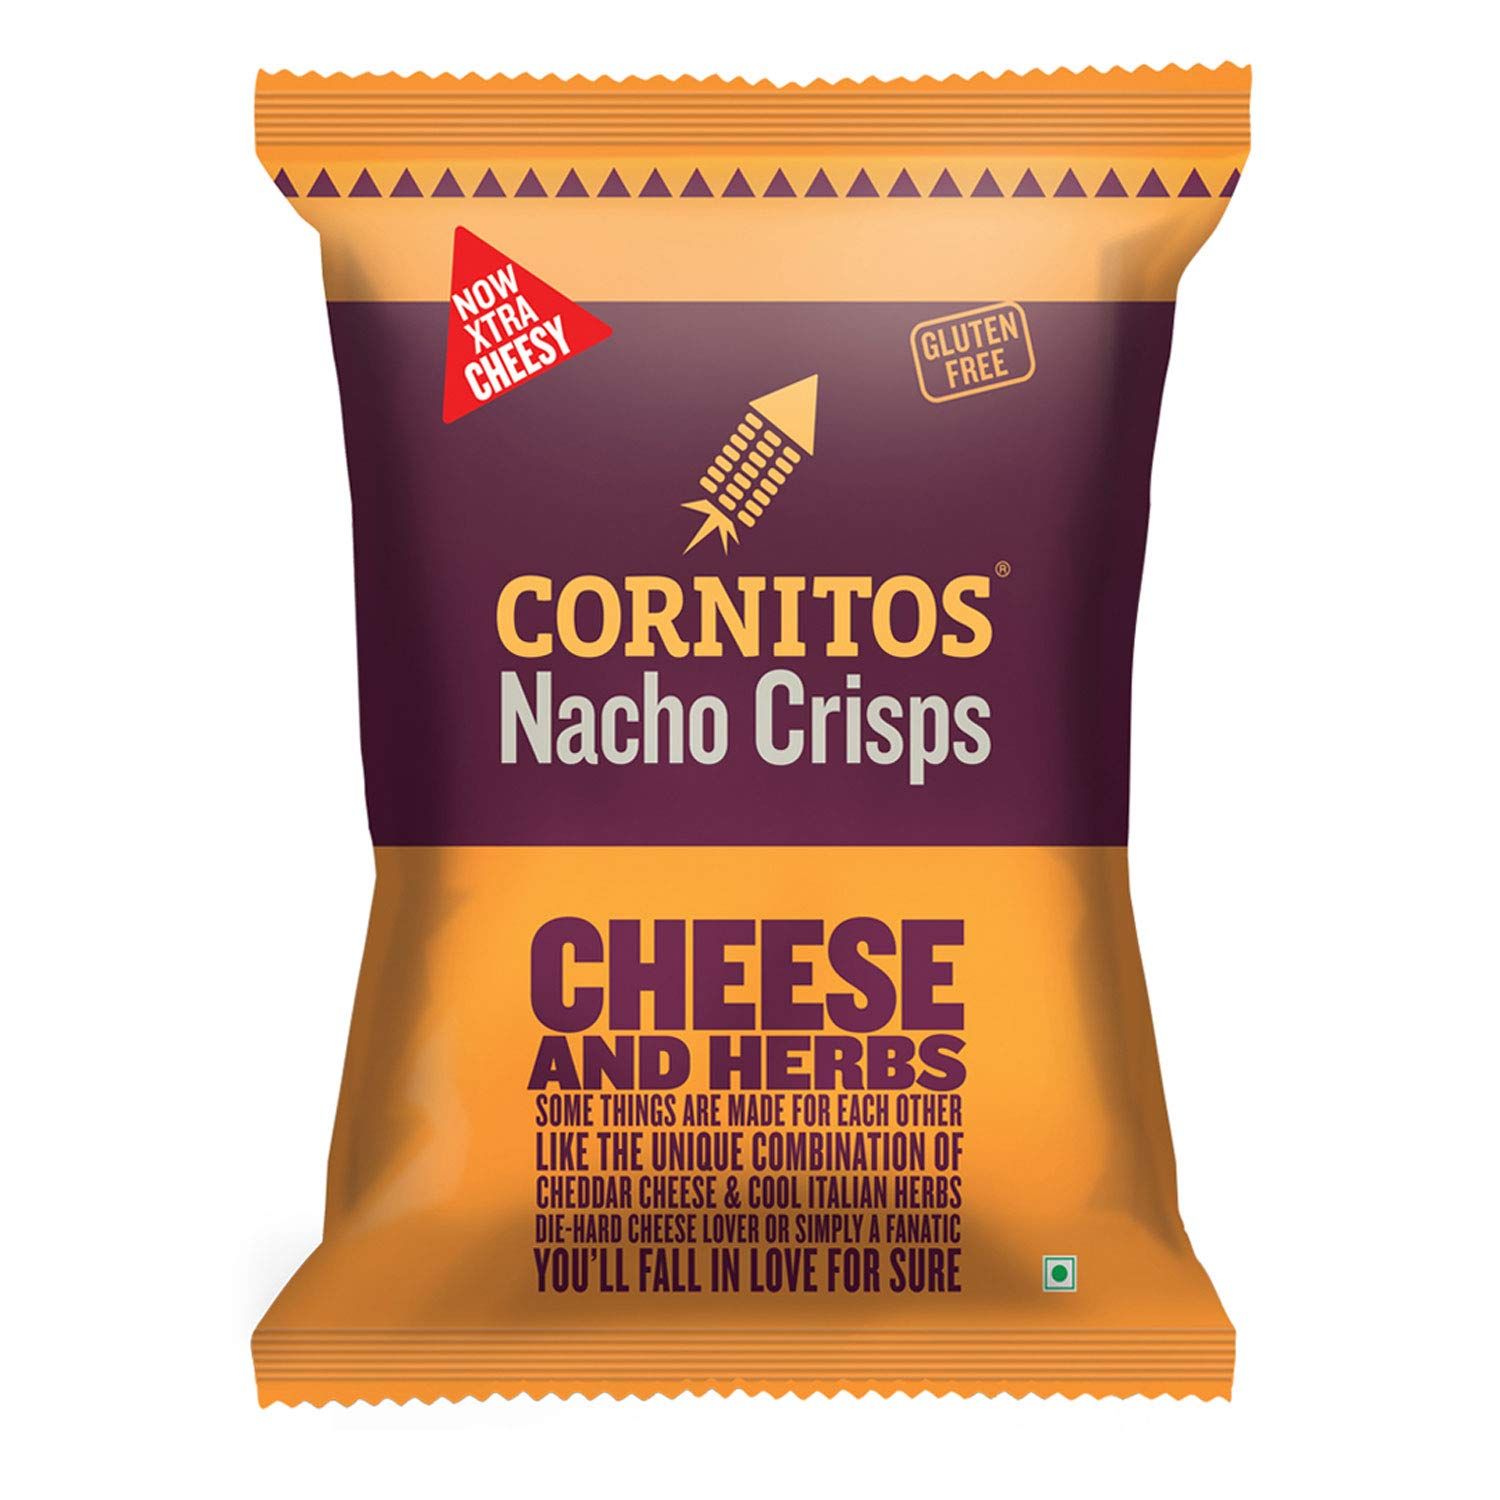 Cornitos Nacho Crisps Cheese and Herbs Image